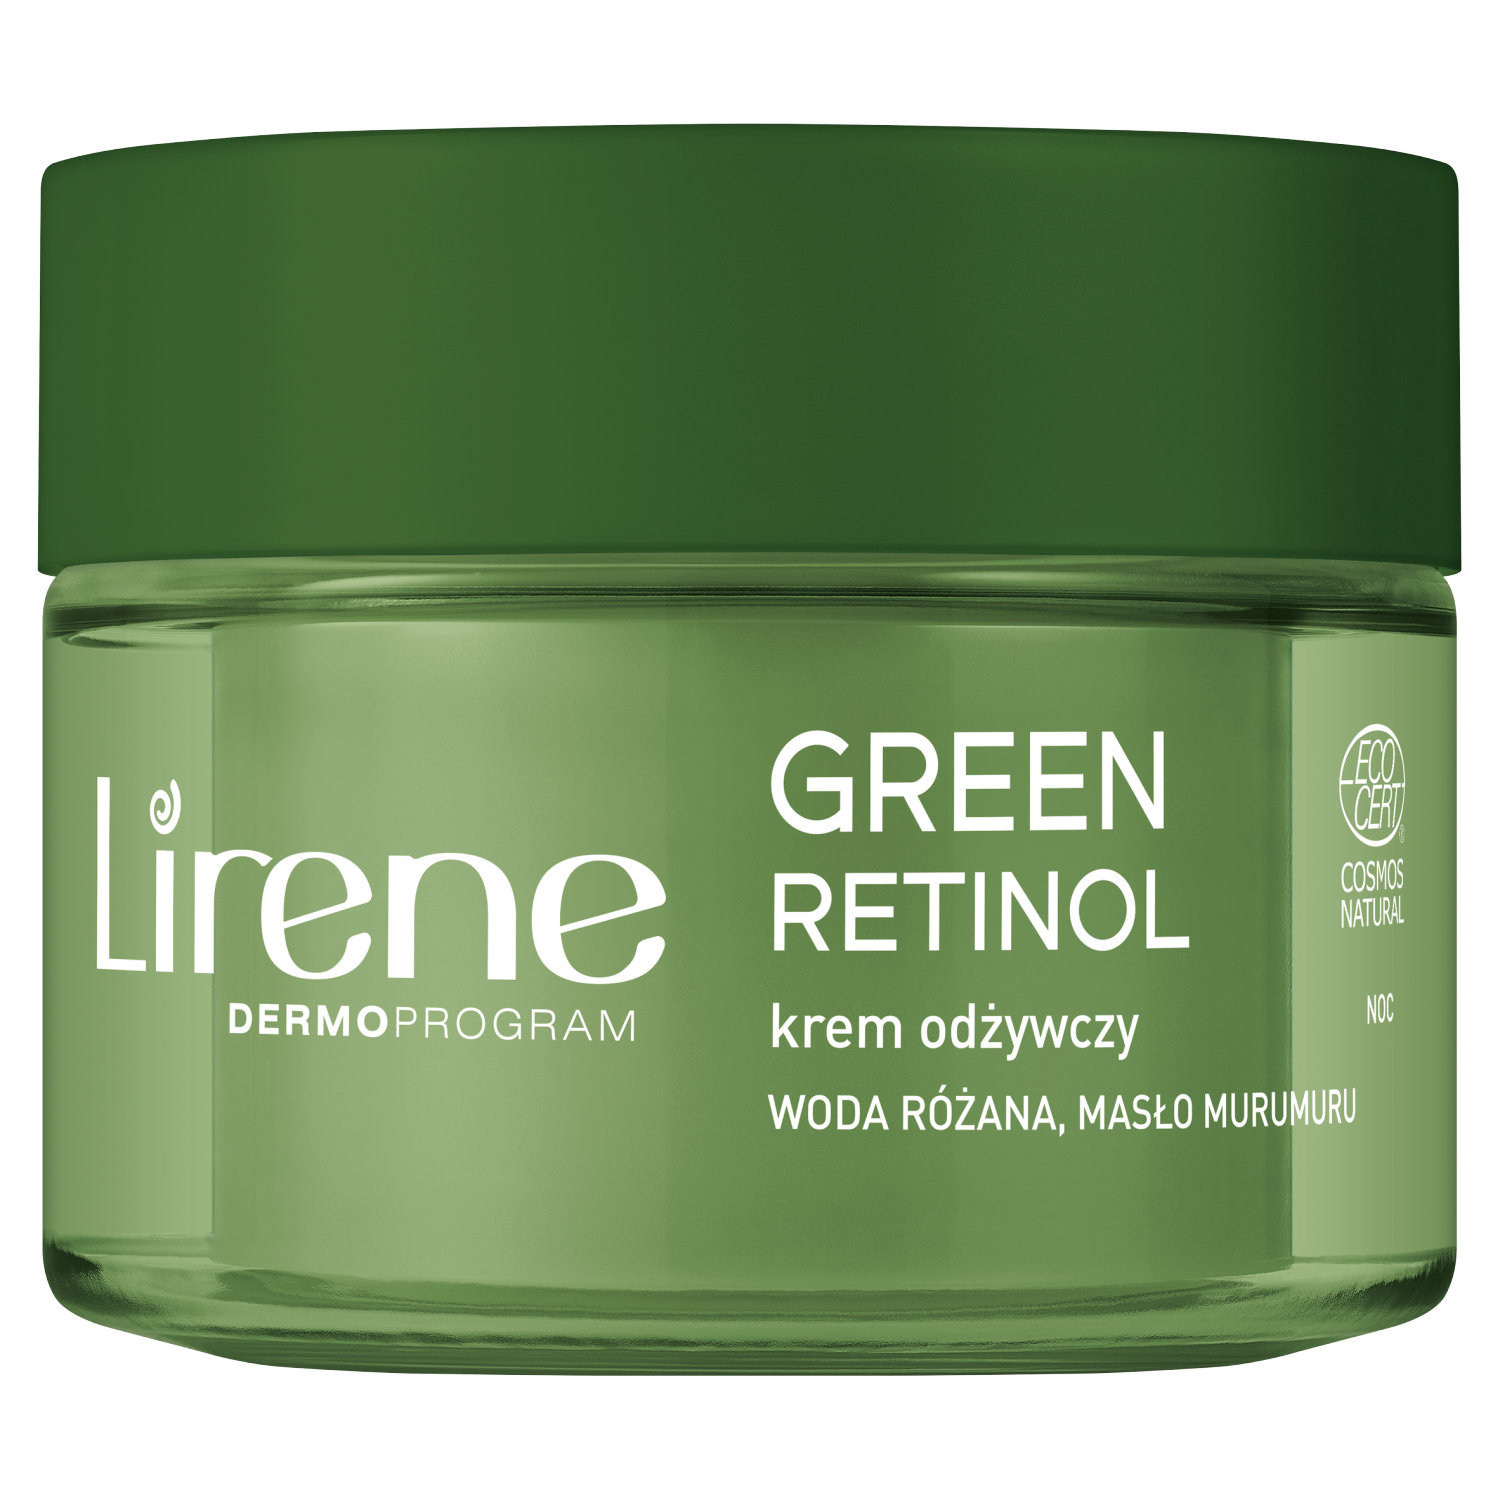 Lirene Green Retinol krem do twarzy 50+ na noc, 50 ml | hebe.pl